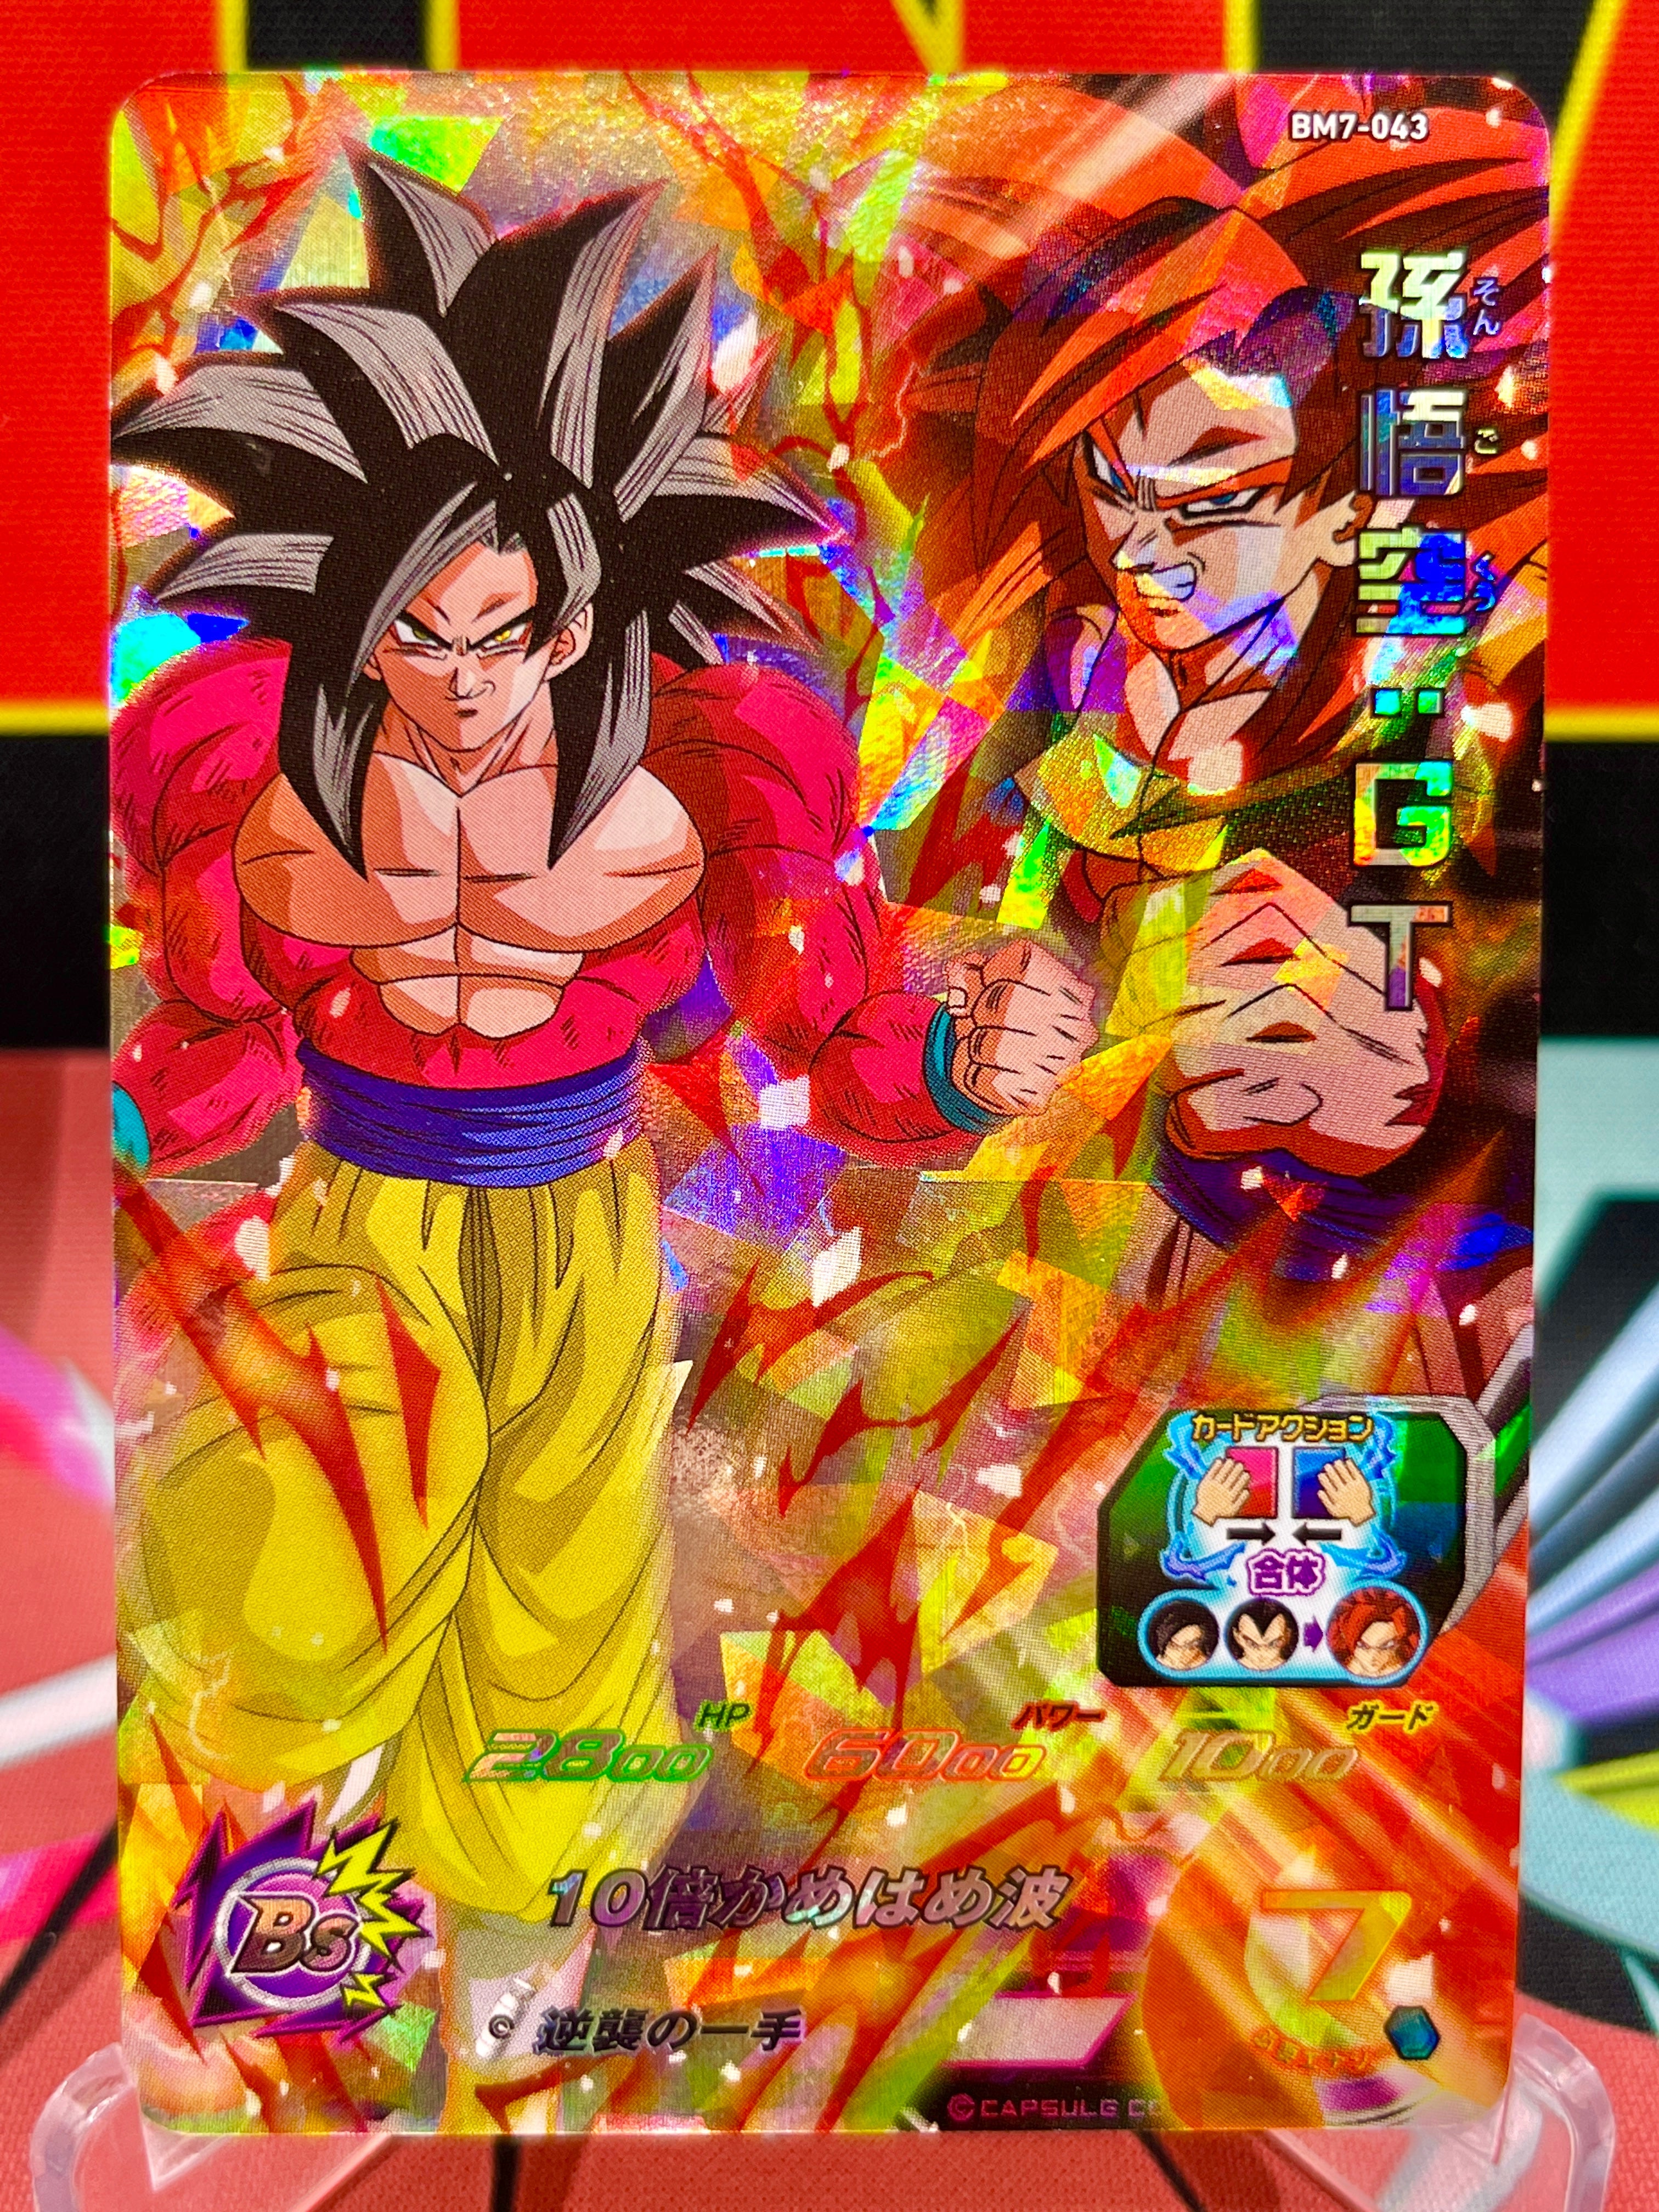 BM7-043 Son Goku & Gogeta SR (2021)